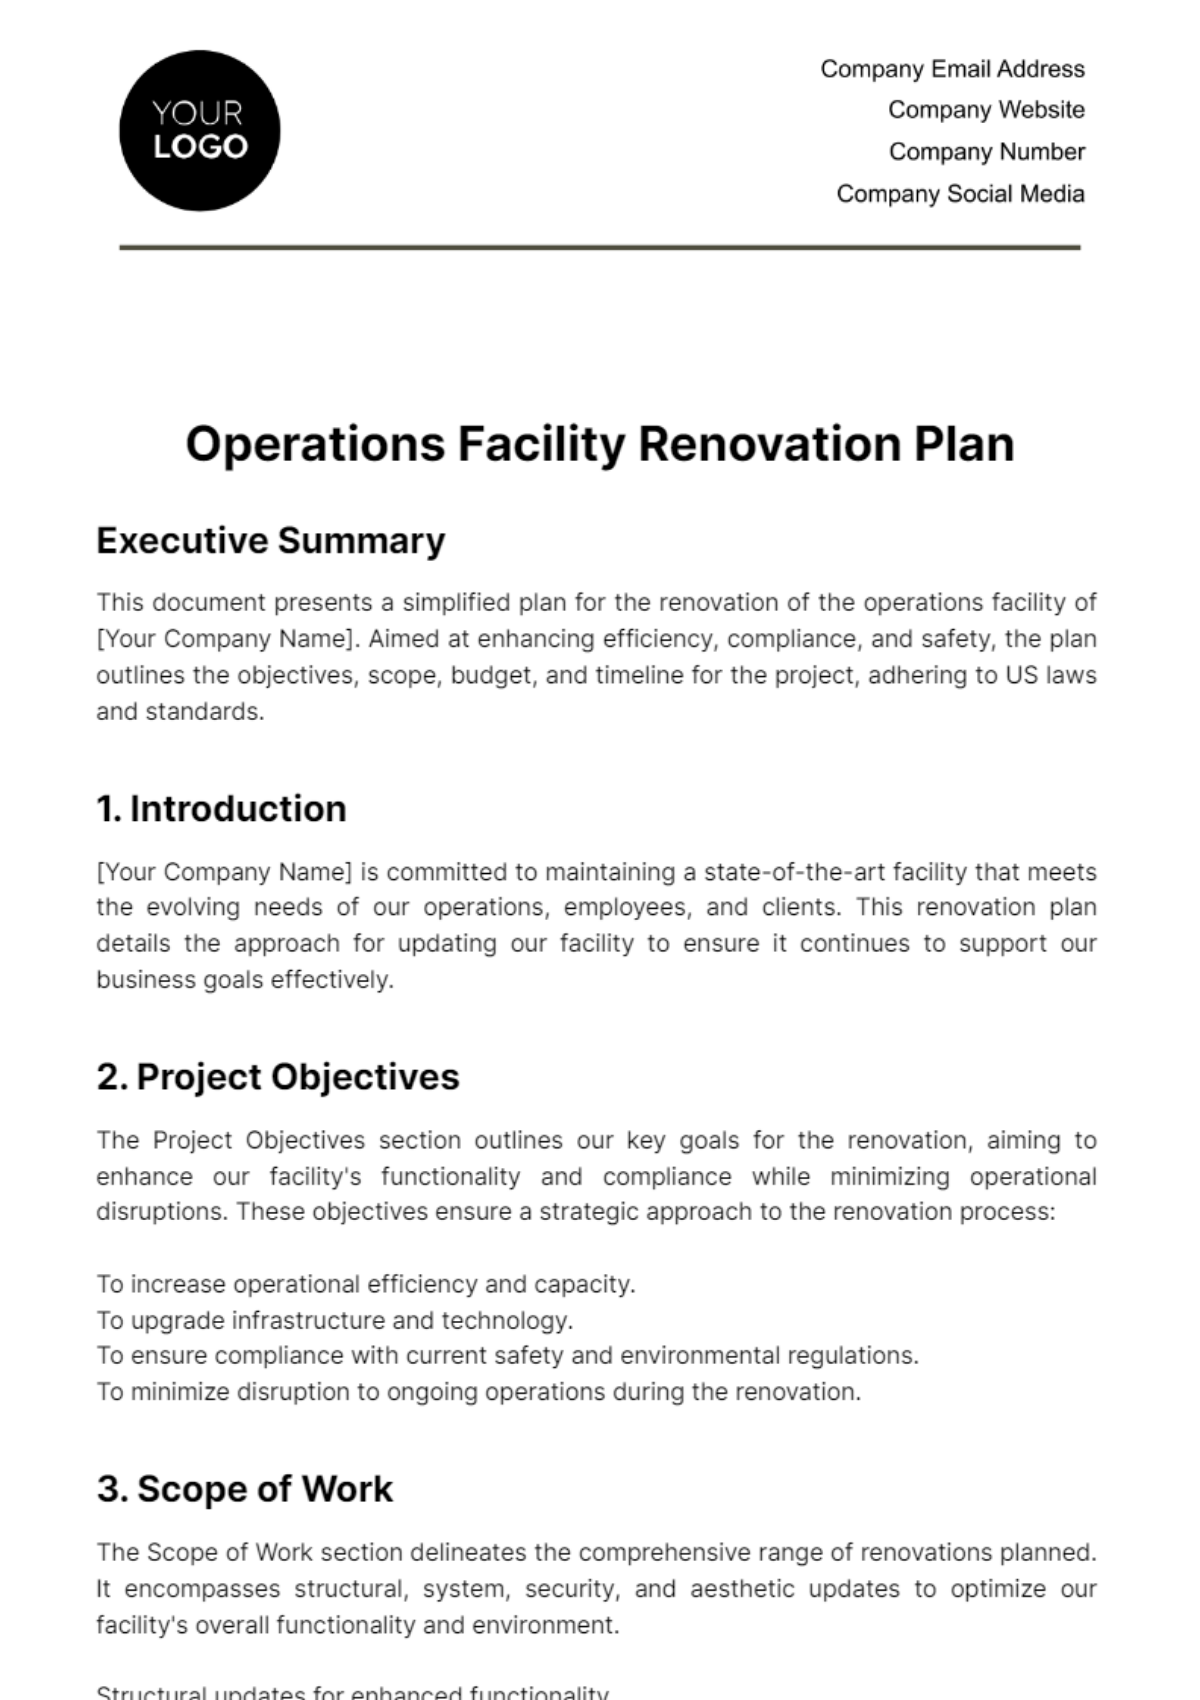 Free Operations Facility Renovation Plan Template